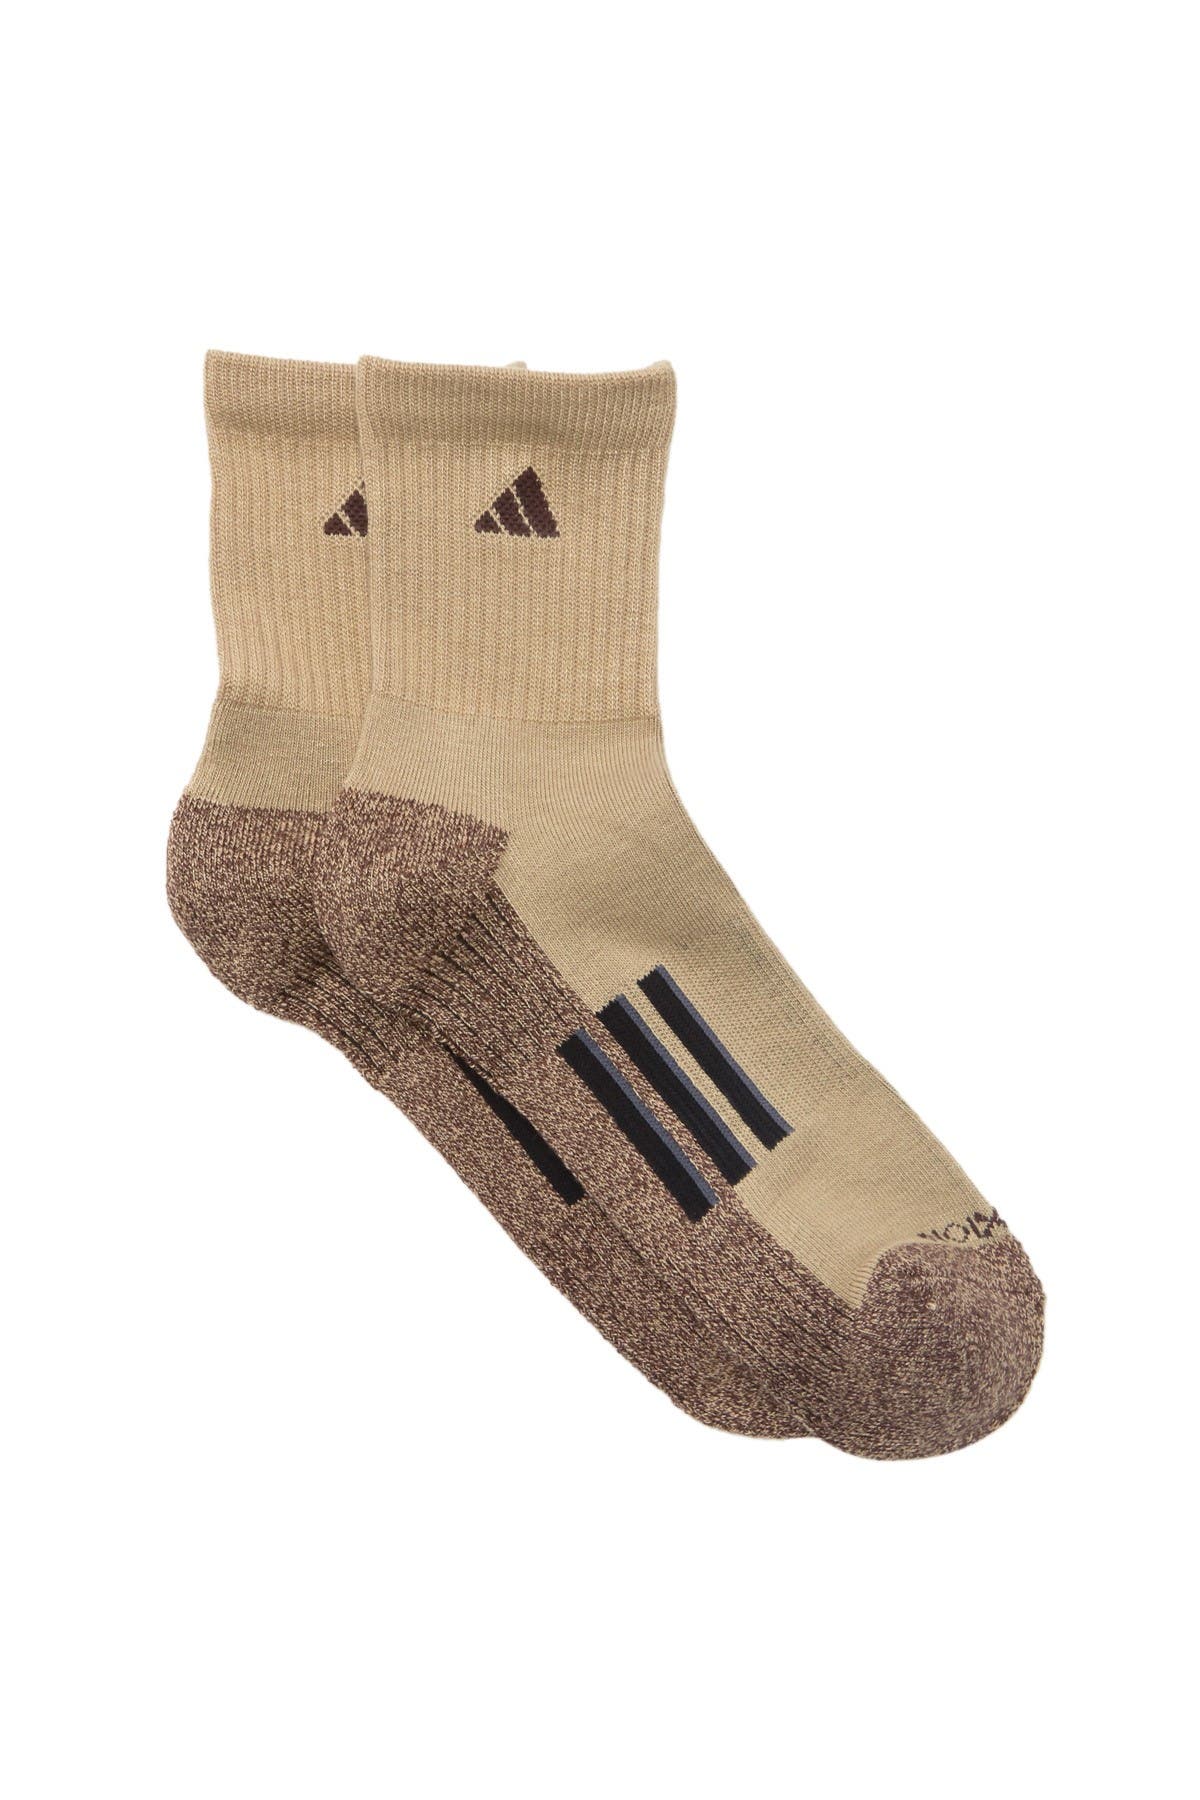 adidas khaki socks